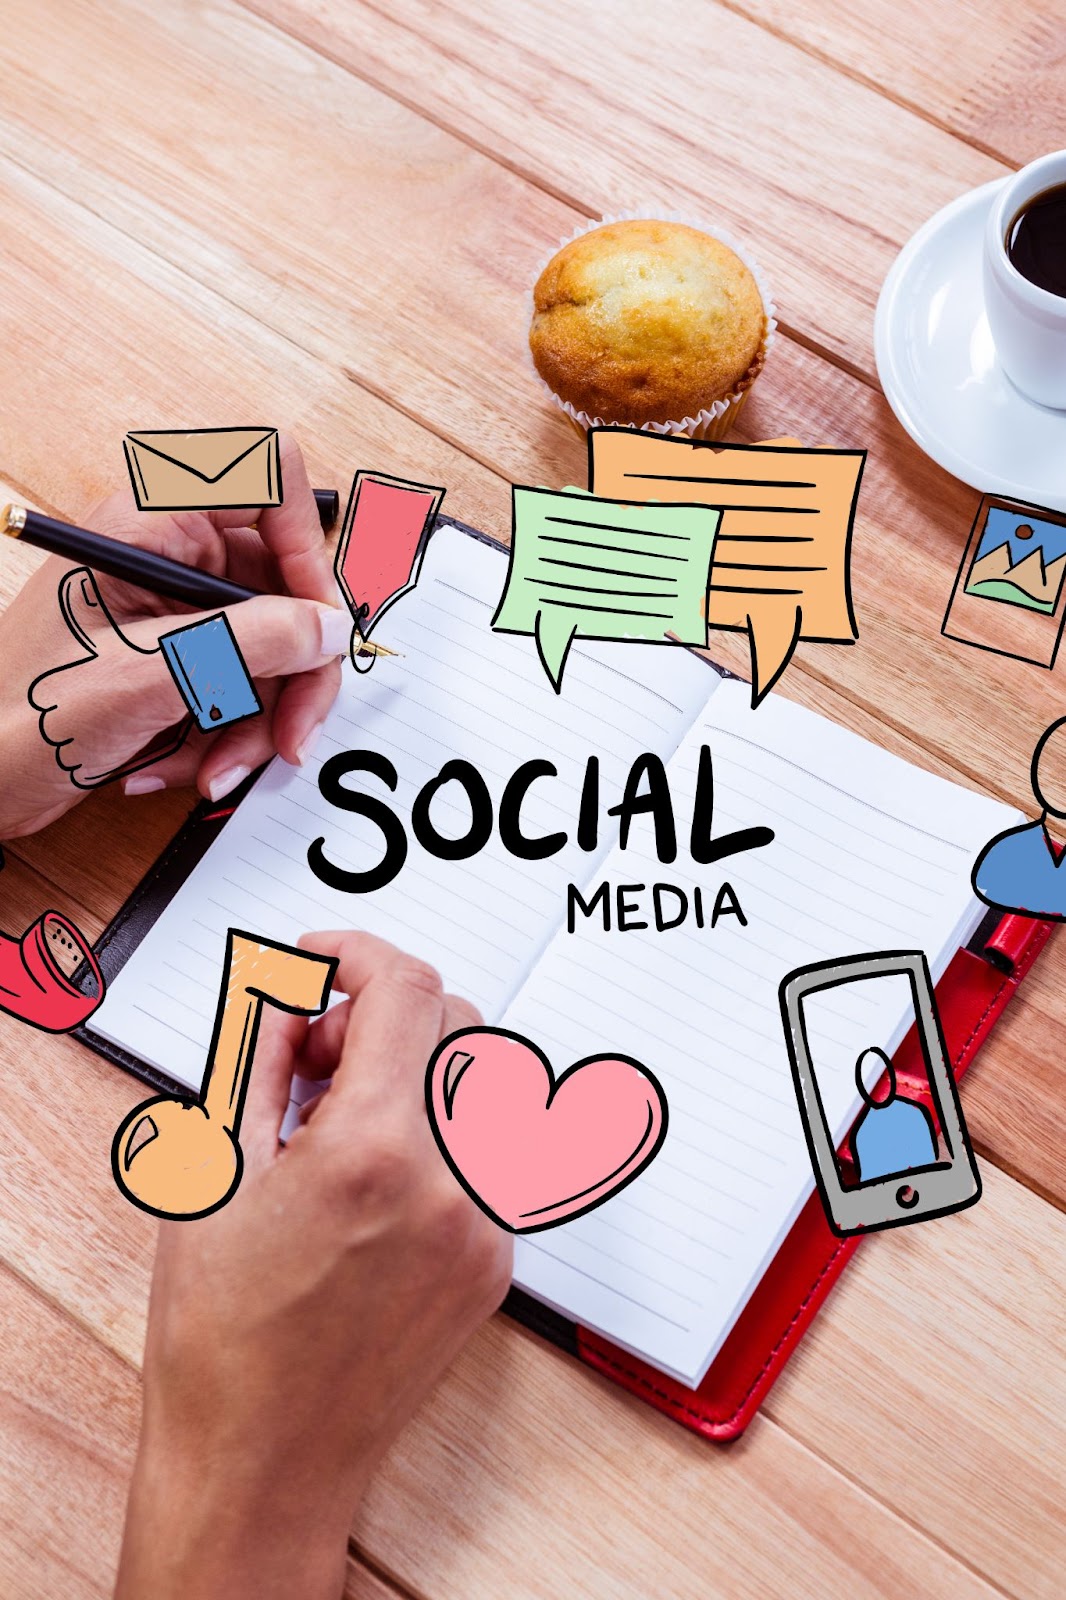 social media marketing strategies for small businesses.